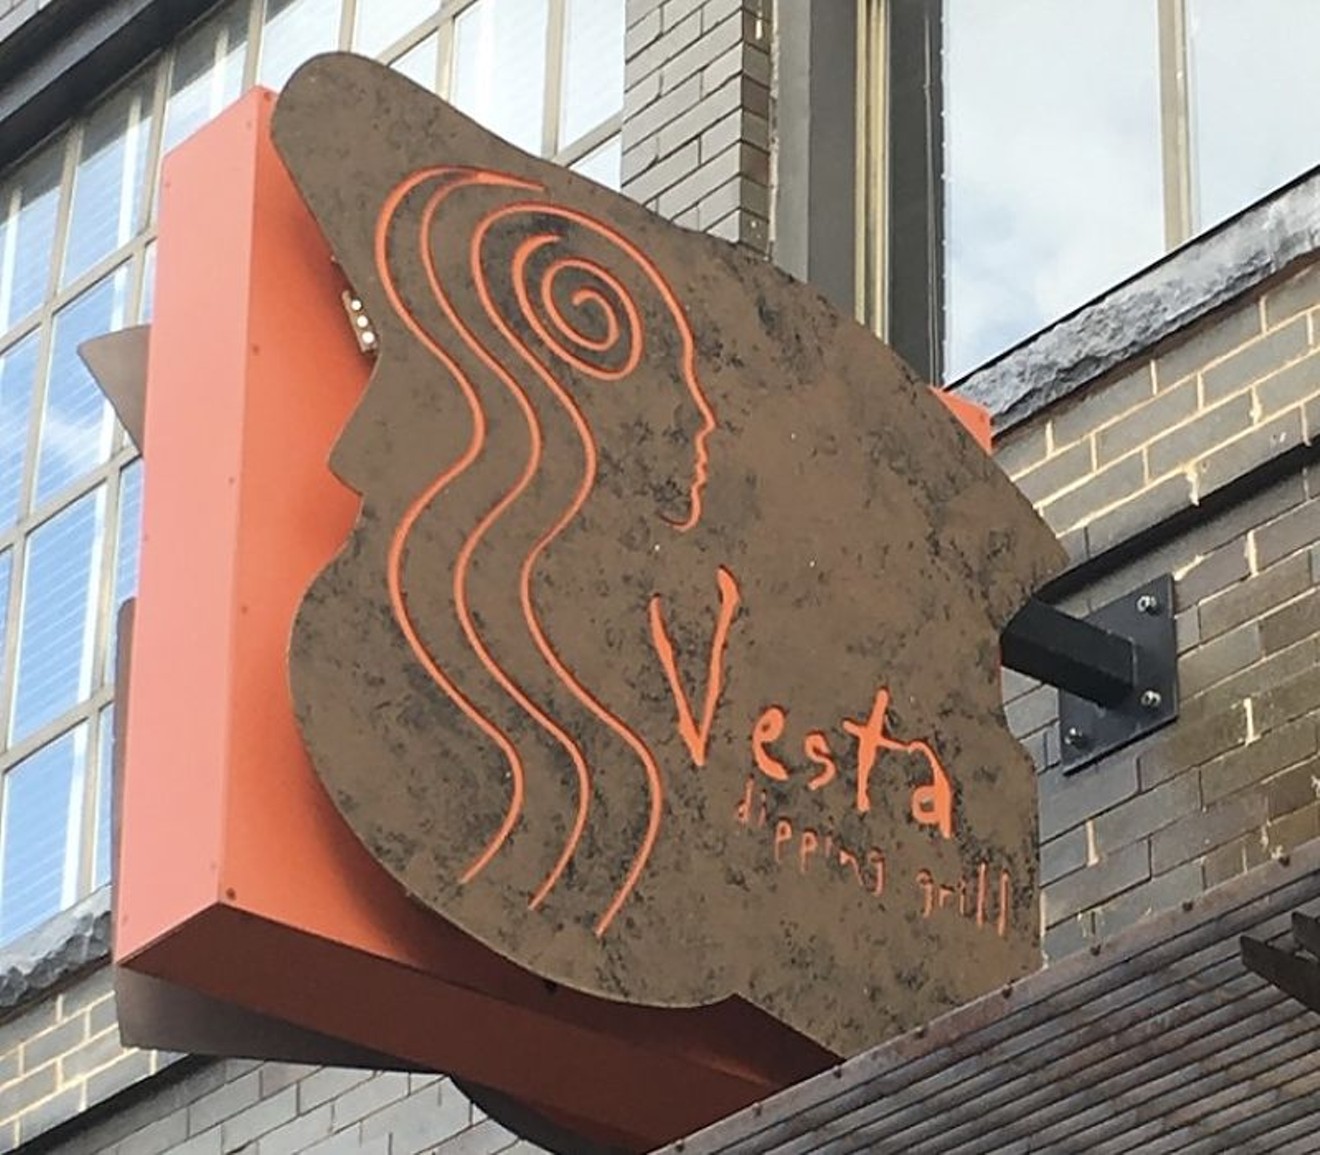 The original Vesta sign livened up a dead block in LoDo in 1997.